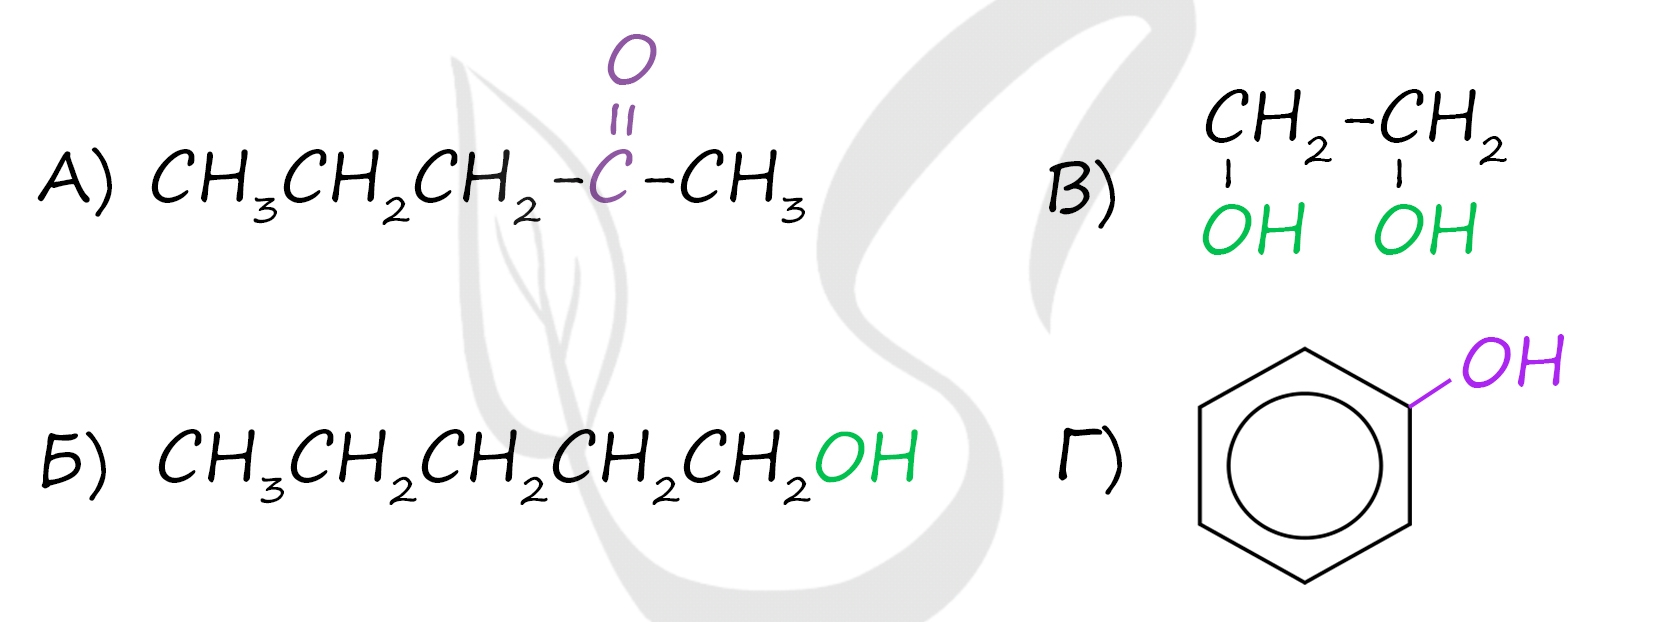 пентанон-2, пентанол-1, этиленгликоль, гидроксибензол